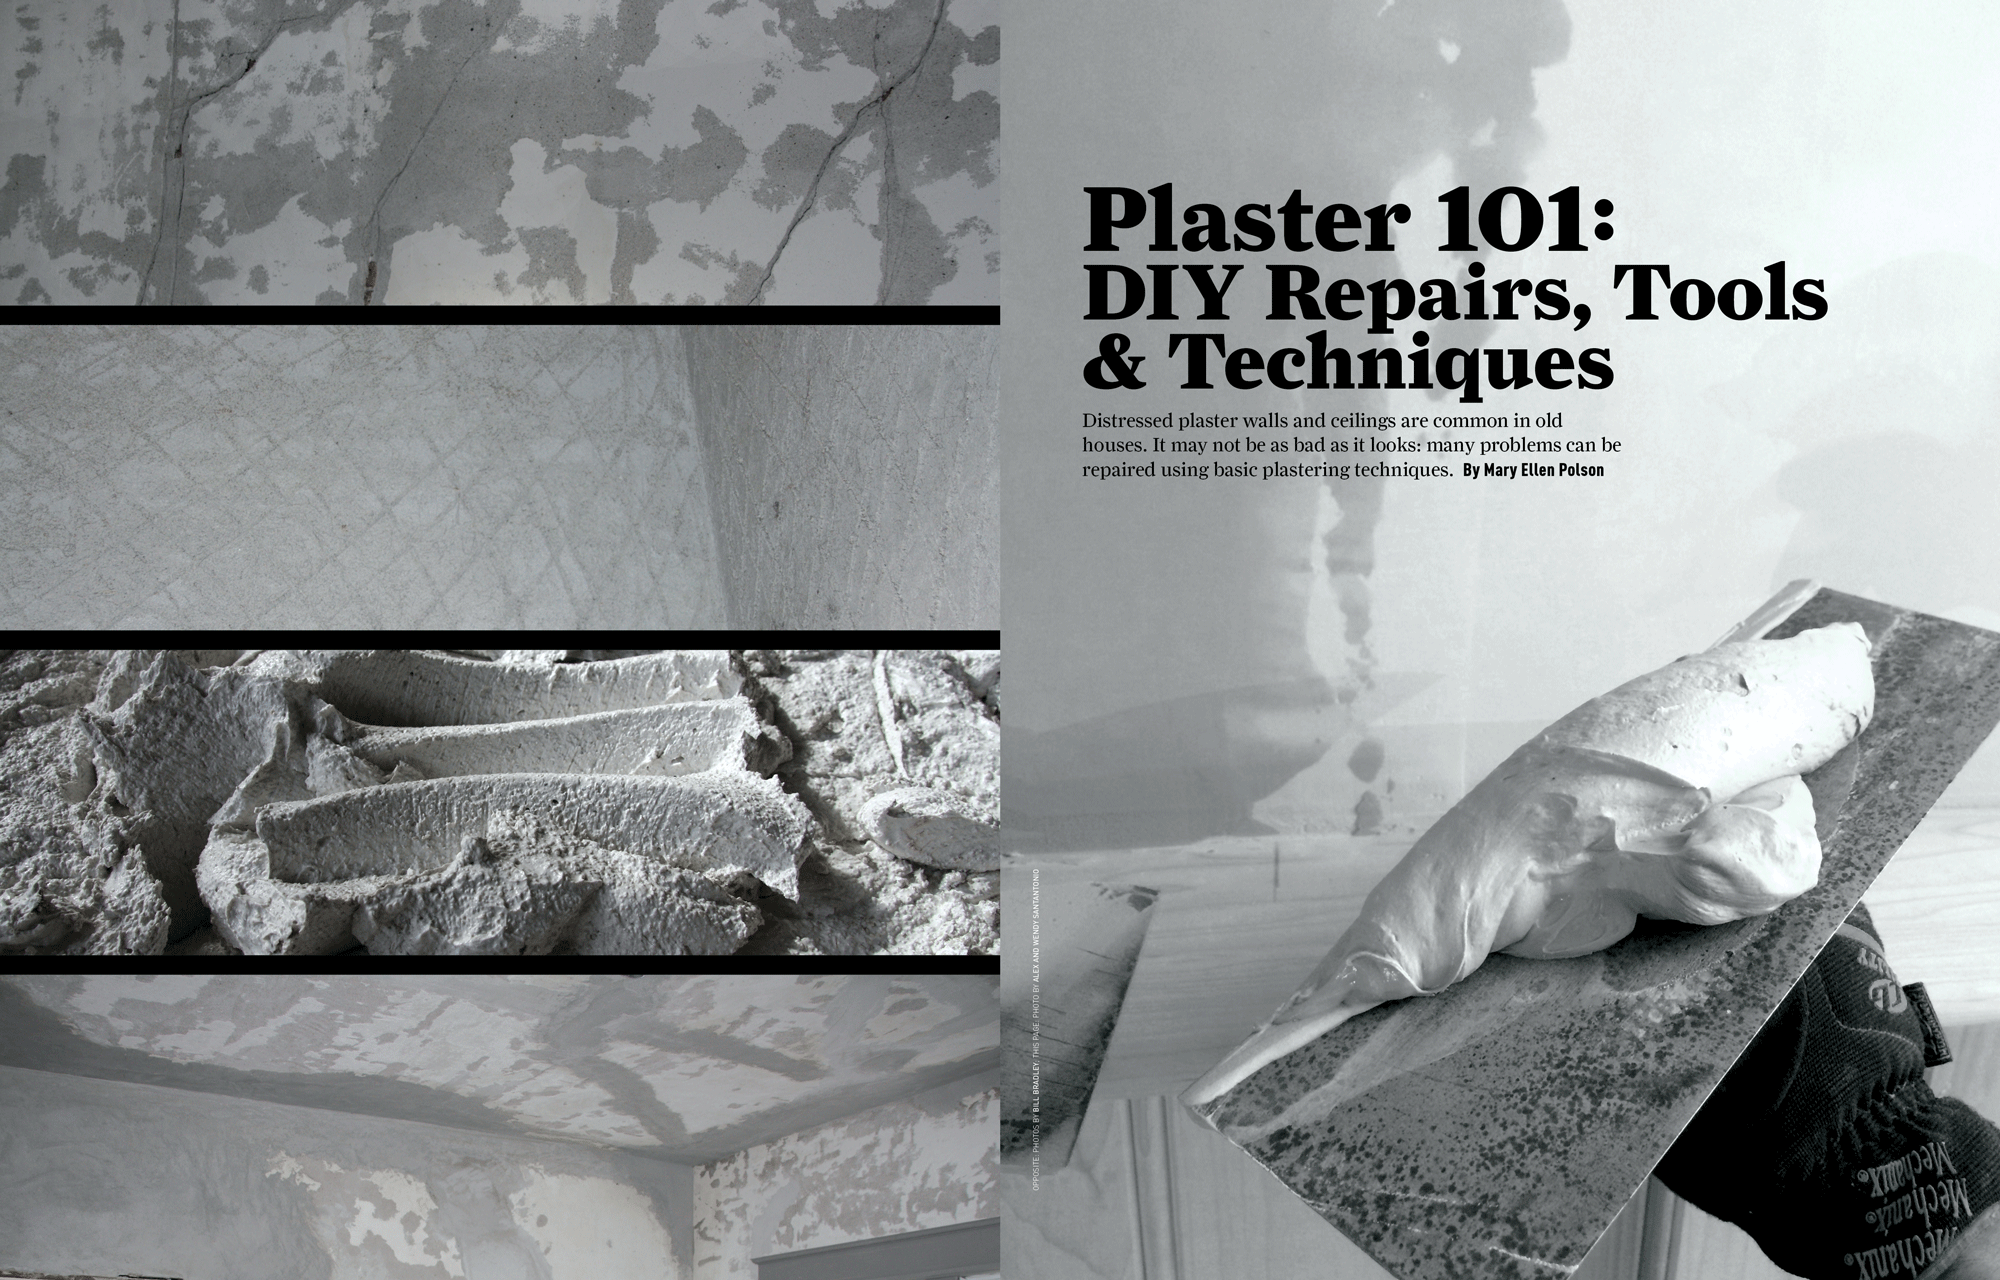 Plaster 101 by Megan Hillman